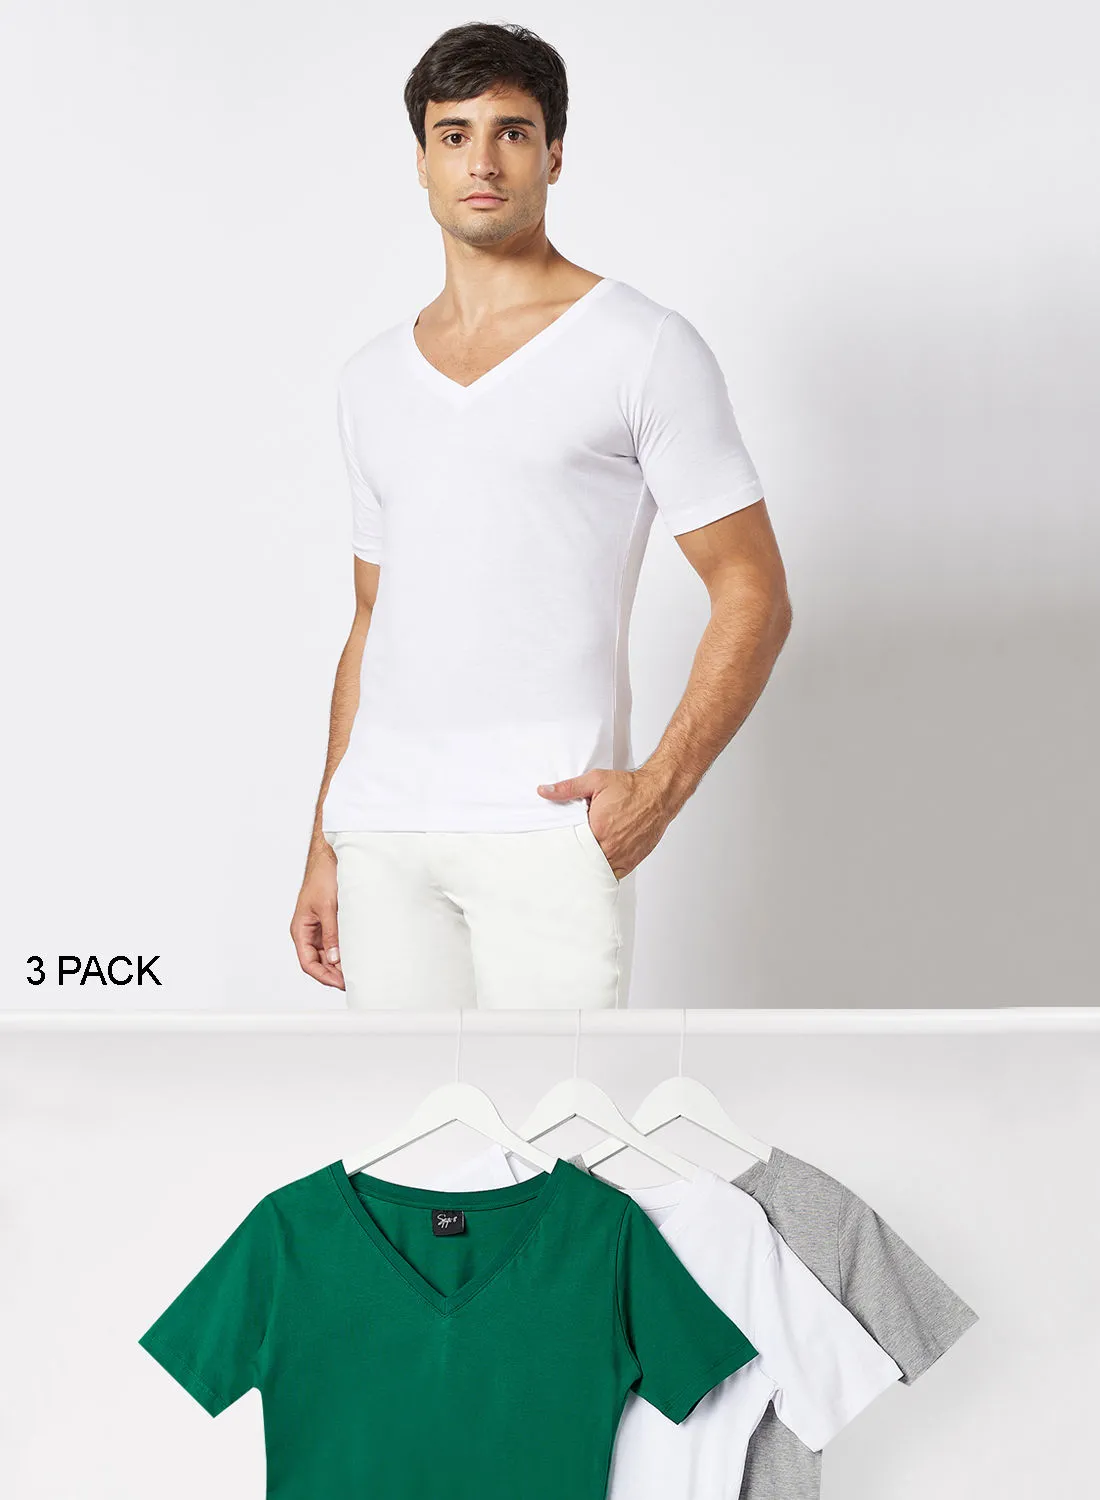 STATE 8 Essential V Neck T-Shirt (عبوة من 3) متعدد الألوان